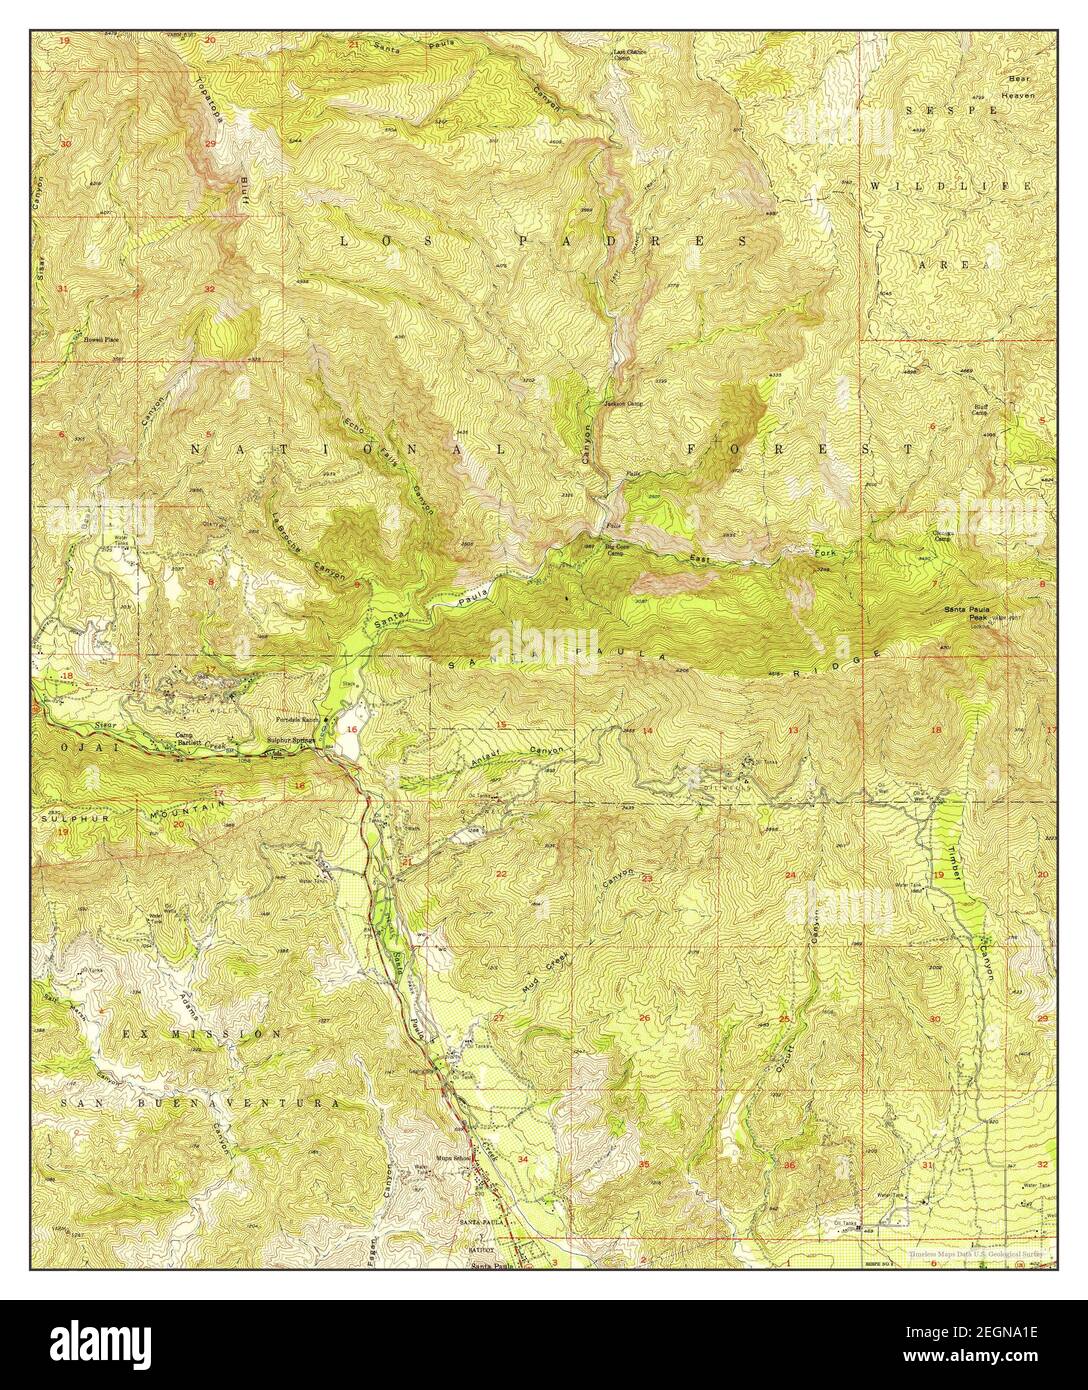 Santa Paula Peak, California, map 1951, 1:24000, United States of America by Timeless Maps, data U.S. Geological Survey Stock Photo